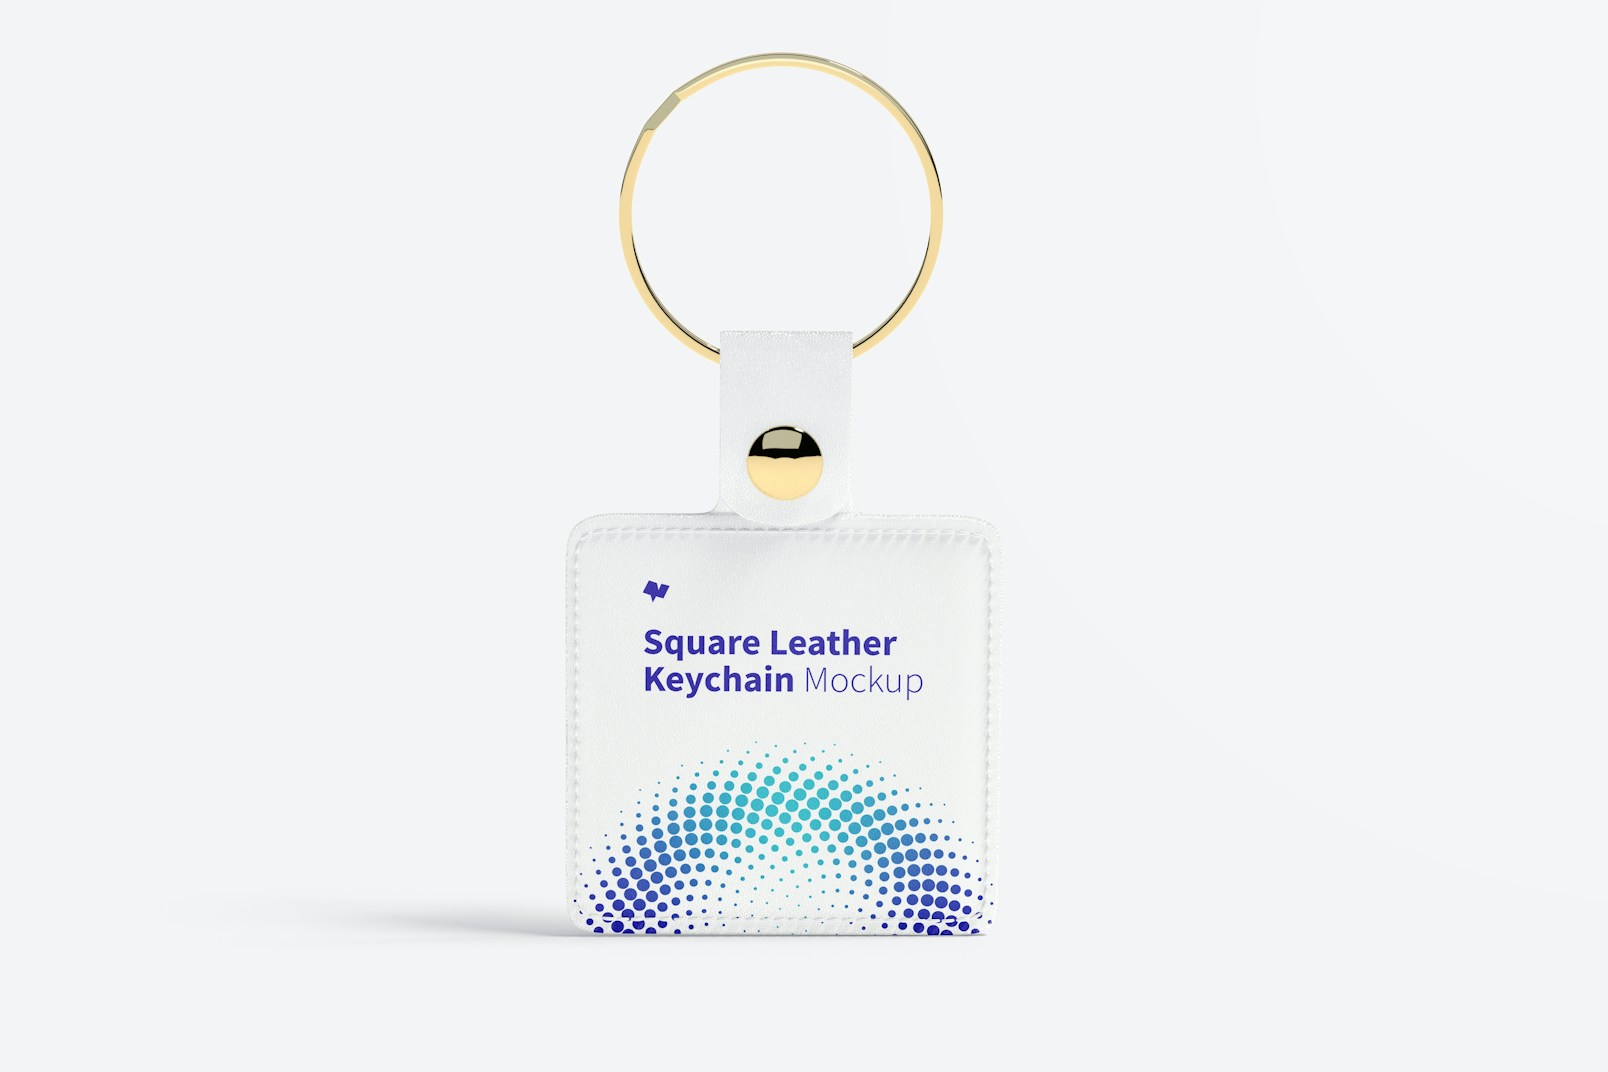 Square Leather Keychain Mockup